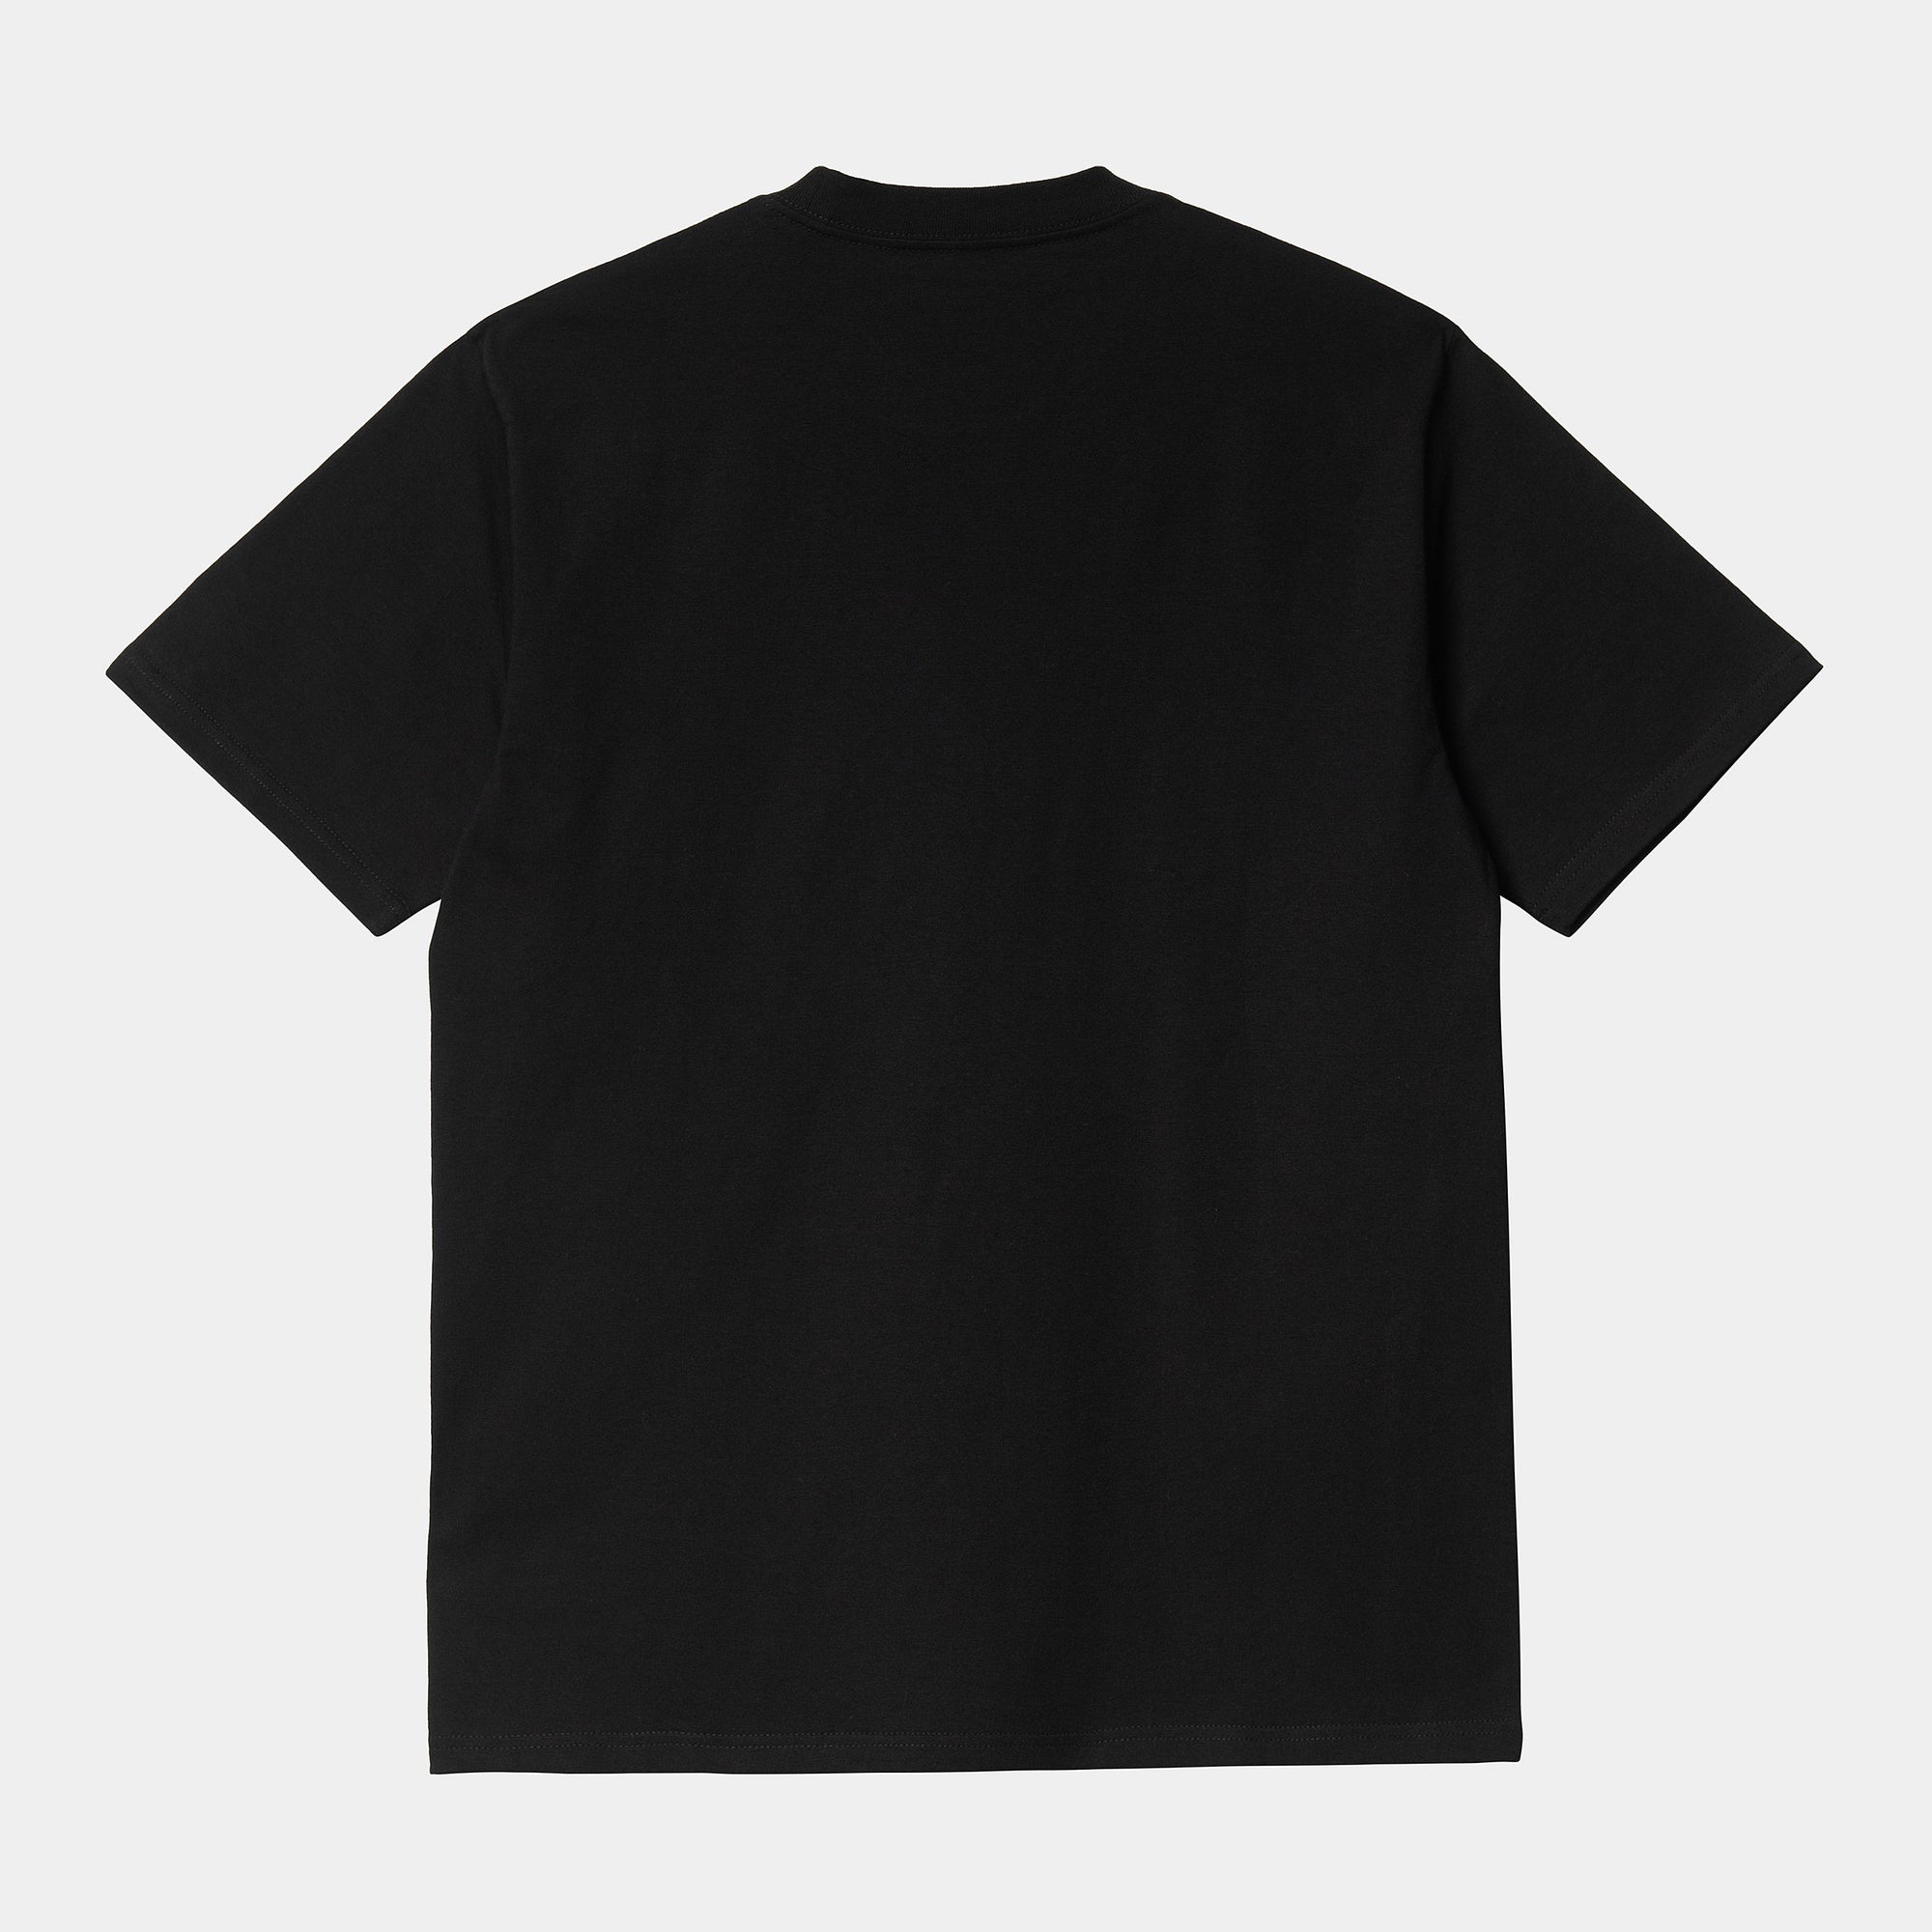 Carhartt T-shirt uomo manica corta Jousting I030195 03 black